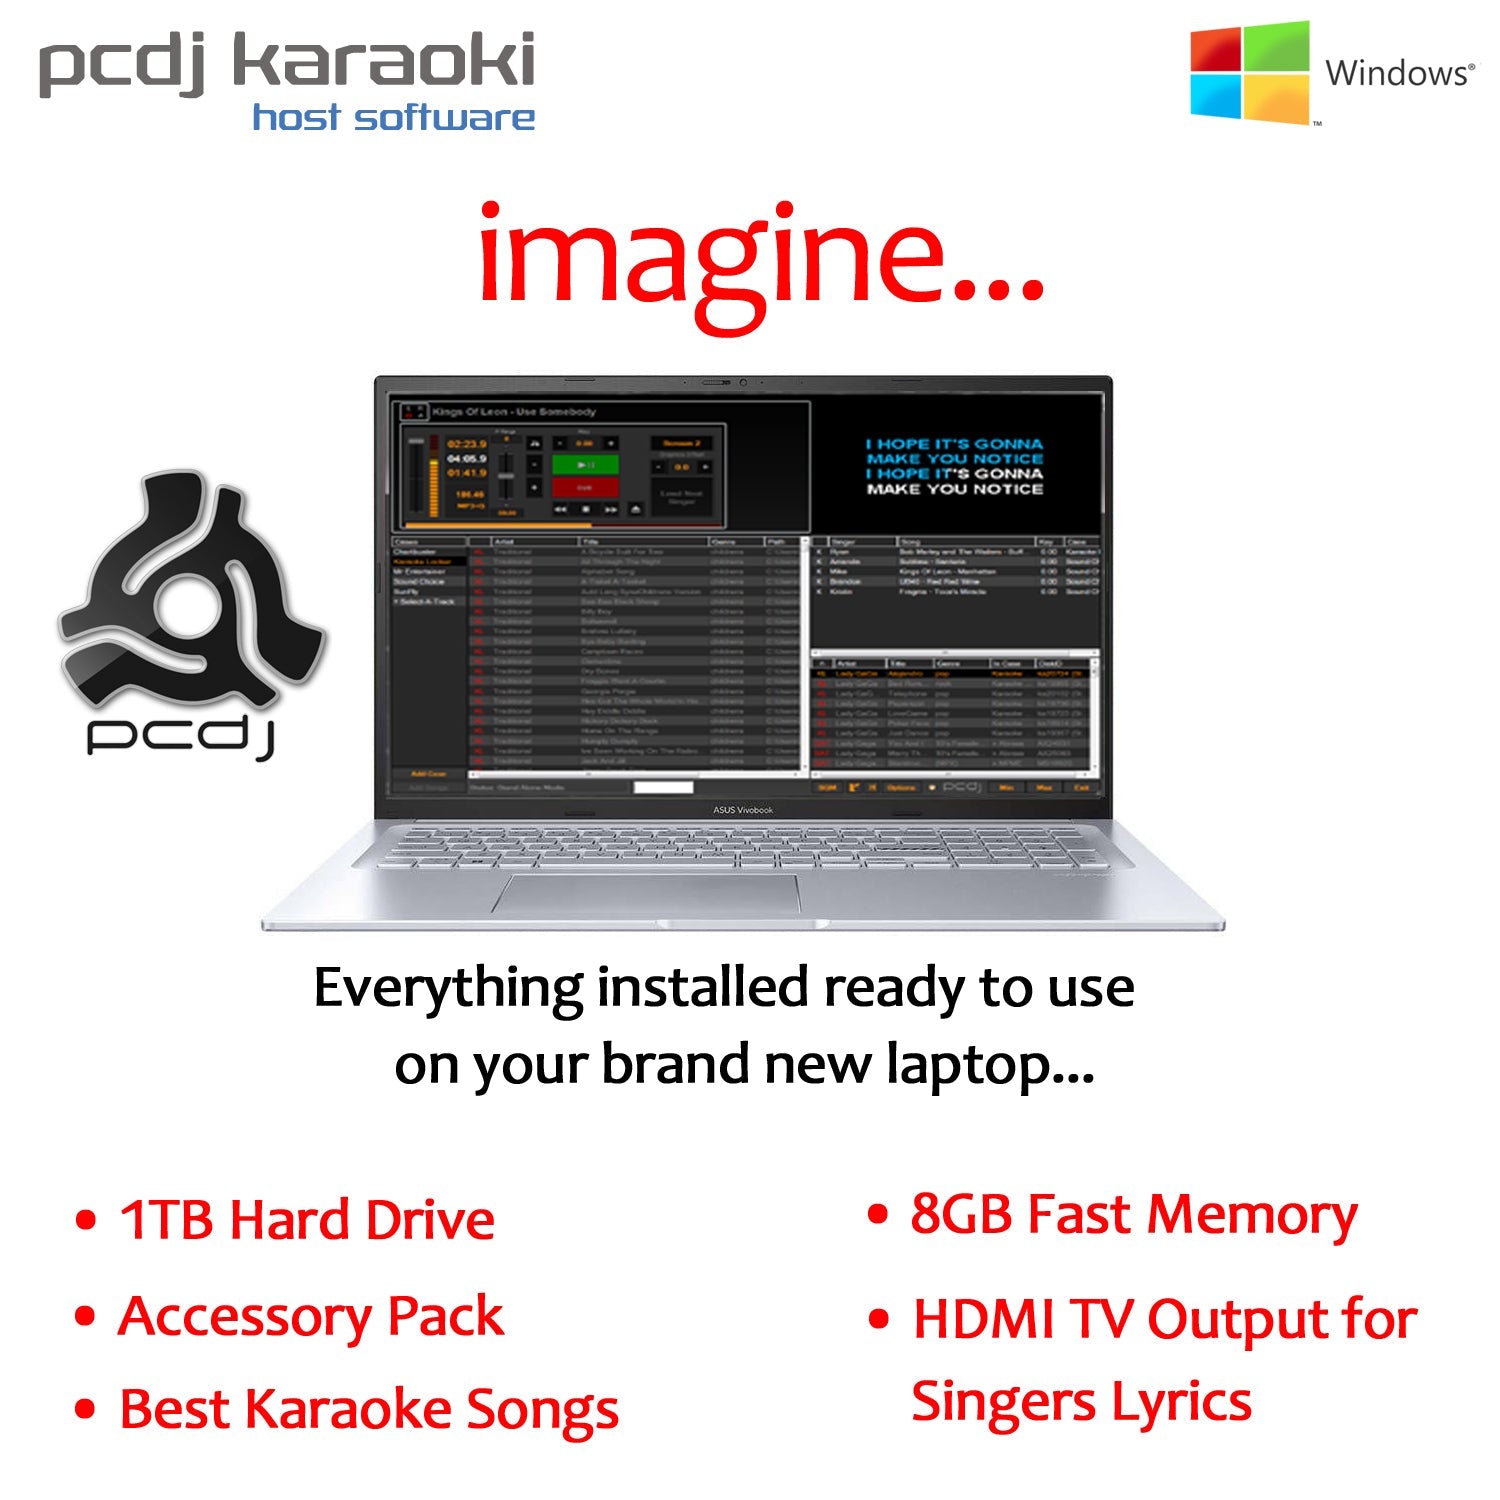 Laptop 17.3" with 8GB Ram and 1 TB Hard Drive for PCDJ Karaoki - Karaoke Home Entertainment